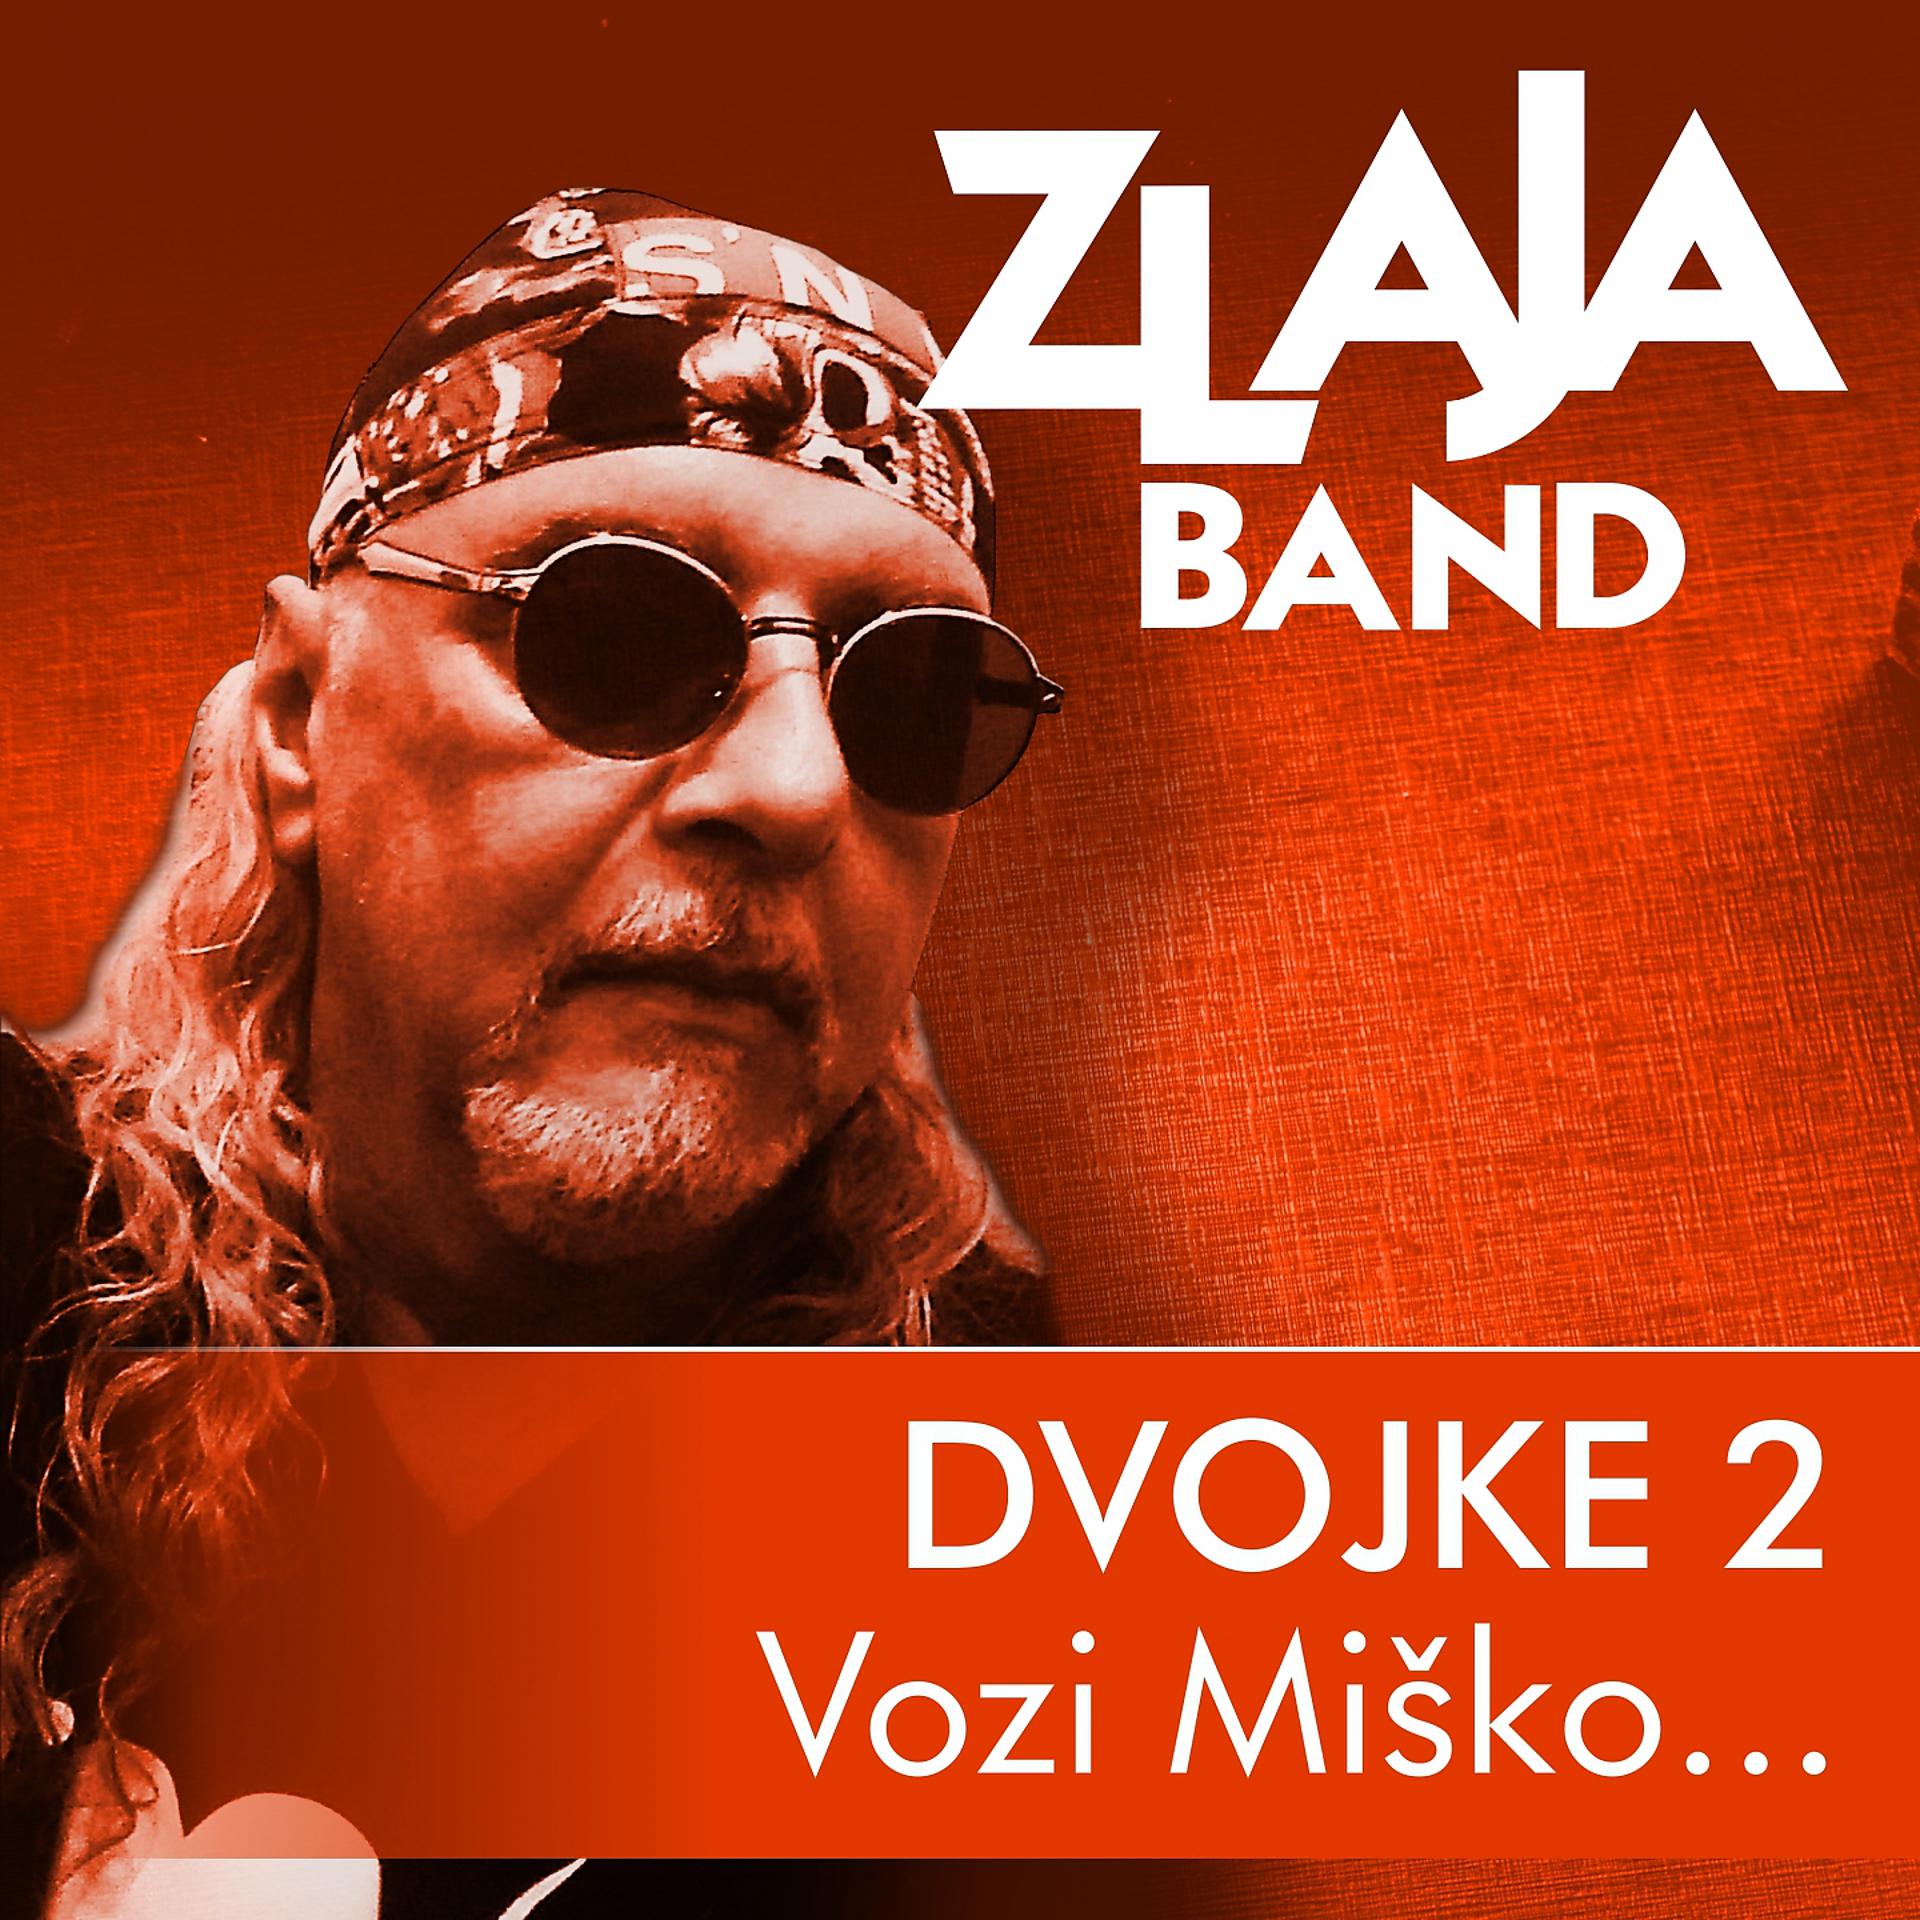 Постер альбома ZLAJA BAND DVOJKE 2 Vozi Misko